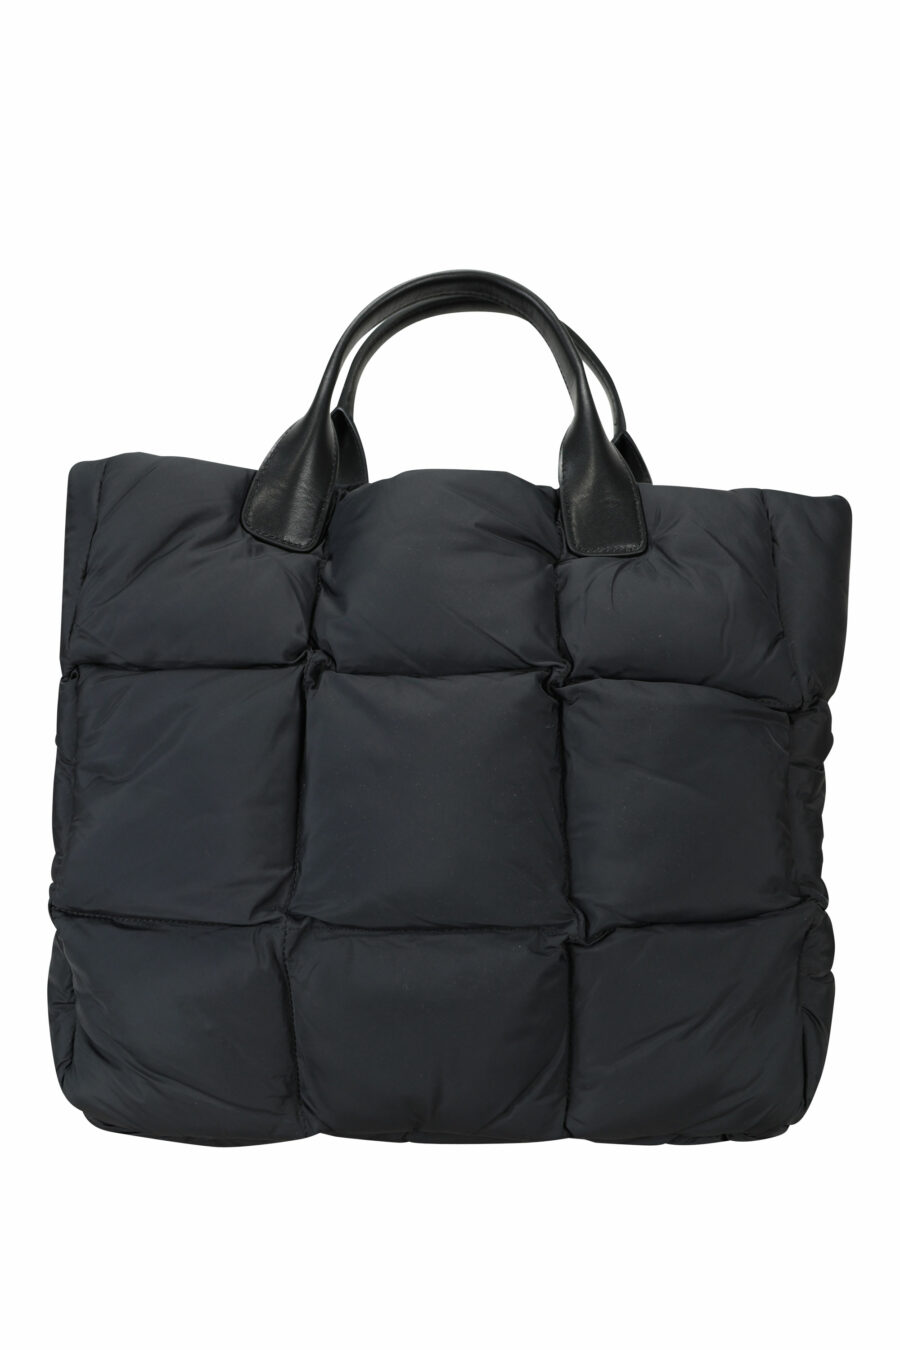 Black shopper bag with metal logo - 8055777276341 4